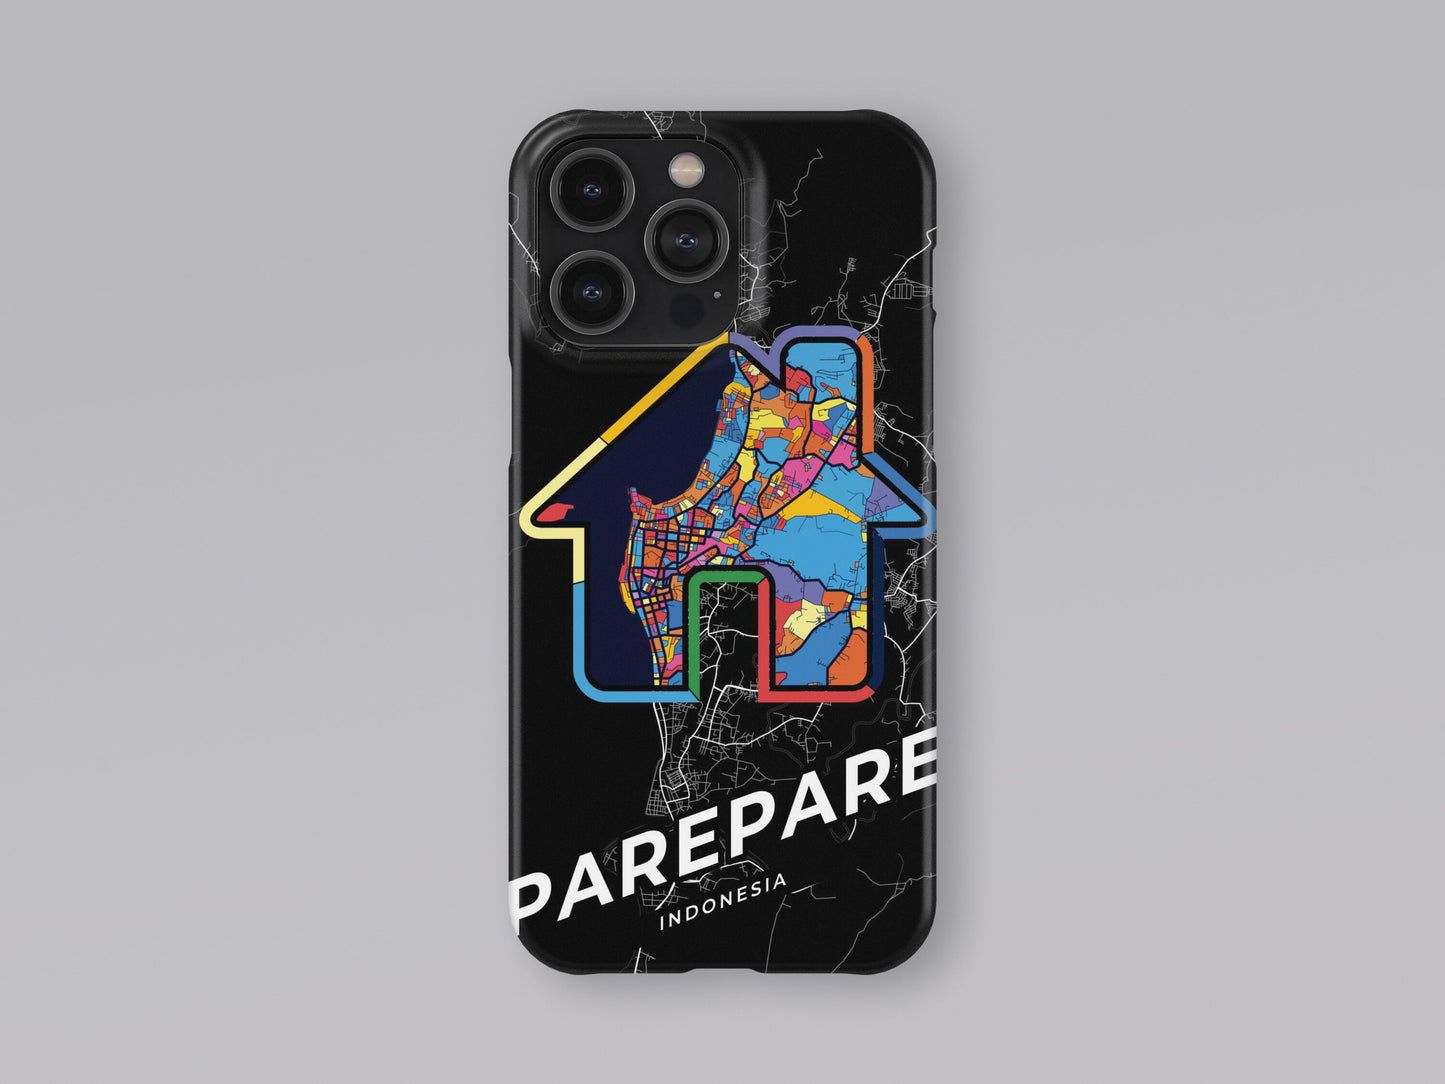 Parepare Indonesia slim phone case with colorful icon 3